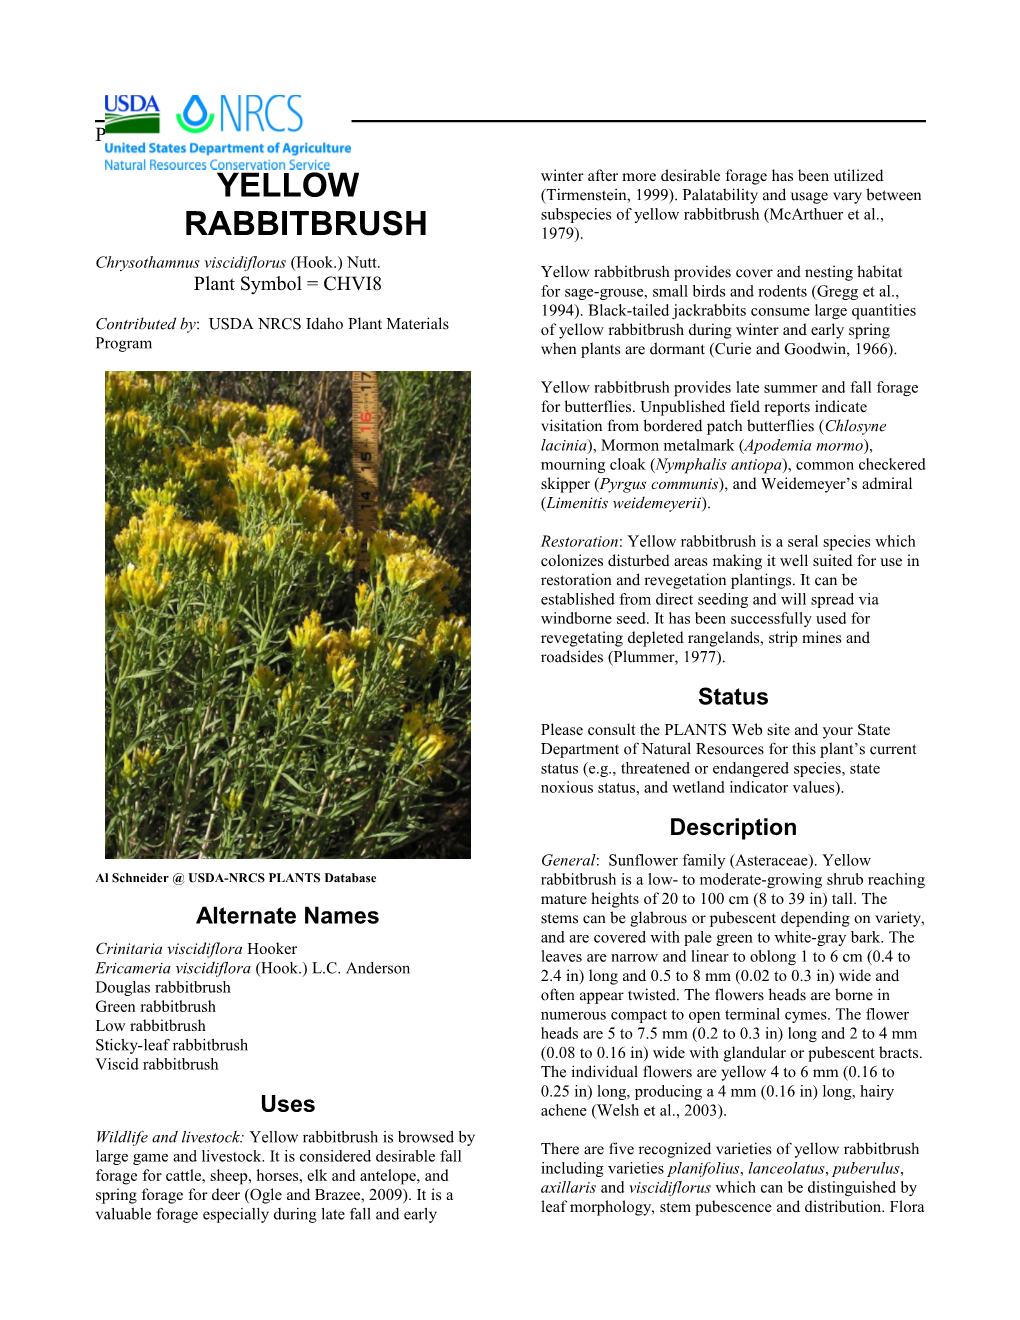 Plant Guide for Yellow Rabbitbrush (Chrysothamnus Viscidiflorus)